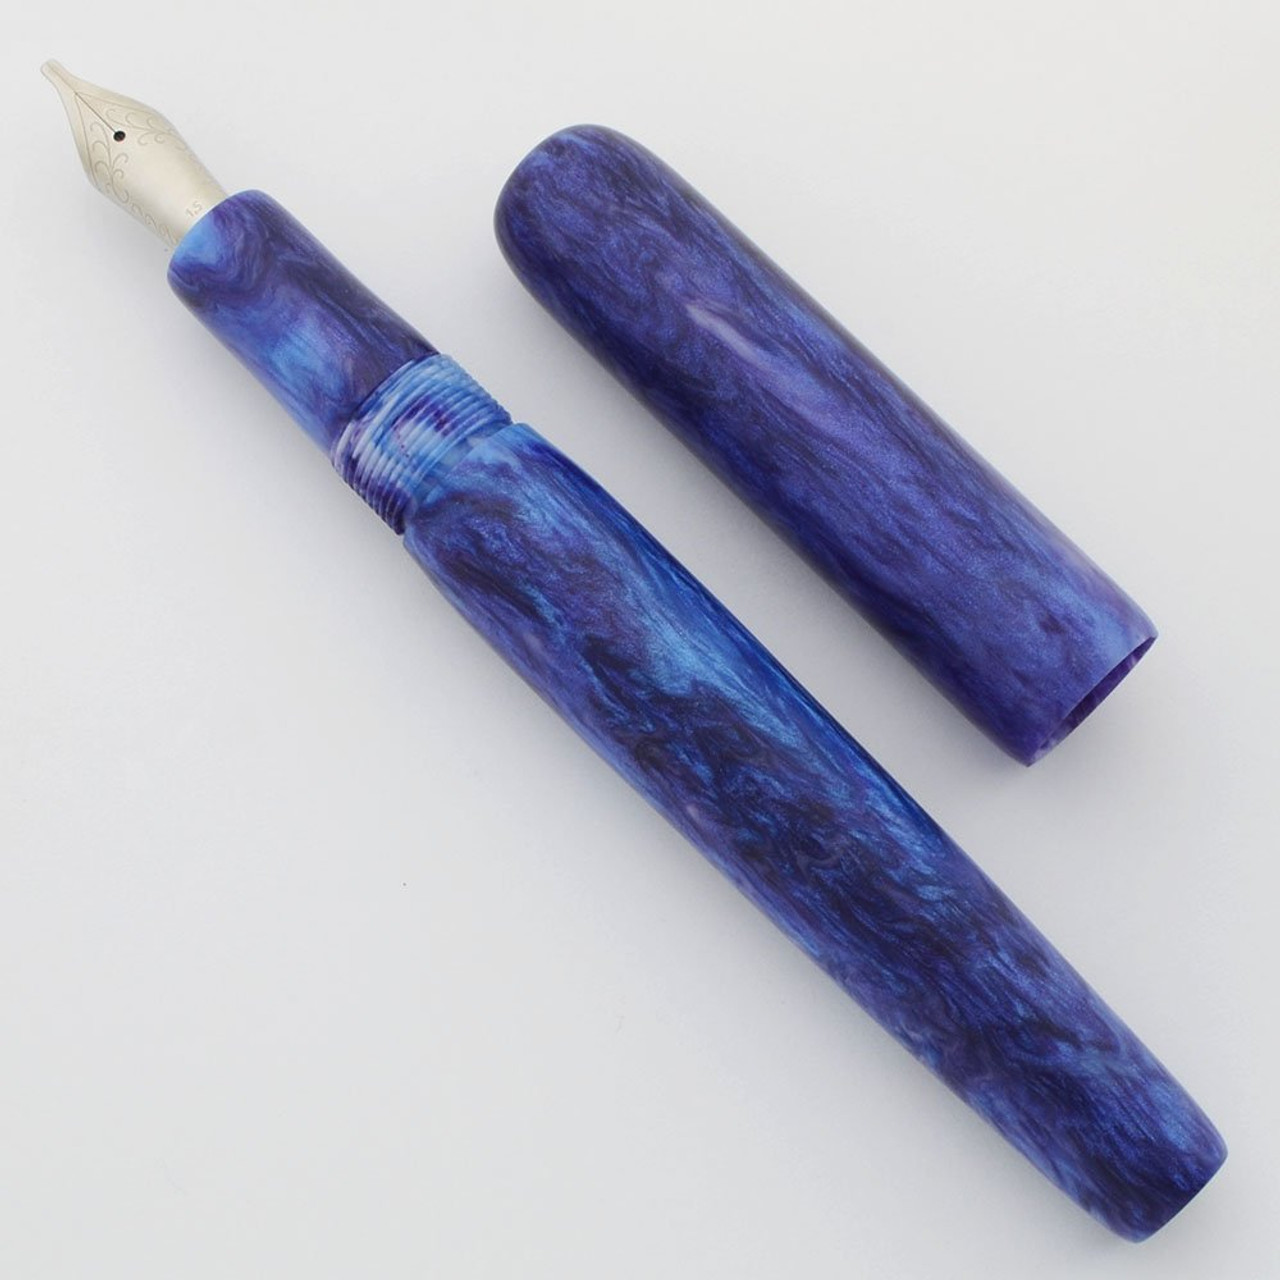 PSPW Prototype Fountain Pen - Matte Blue and Raspberry Alumilite, No Clip, #6 JoWo Nibs (New)